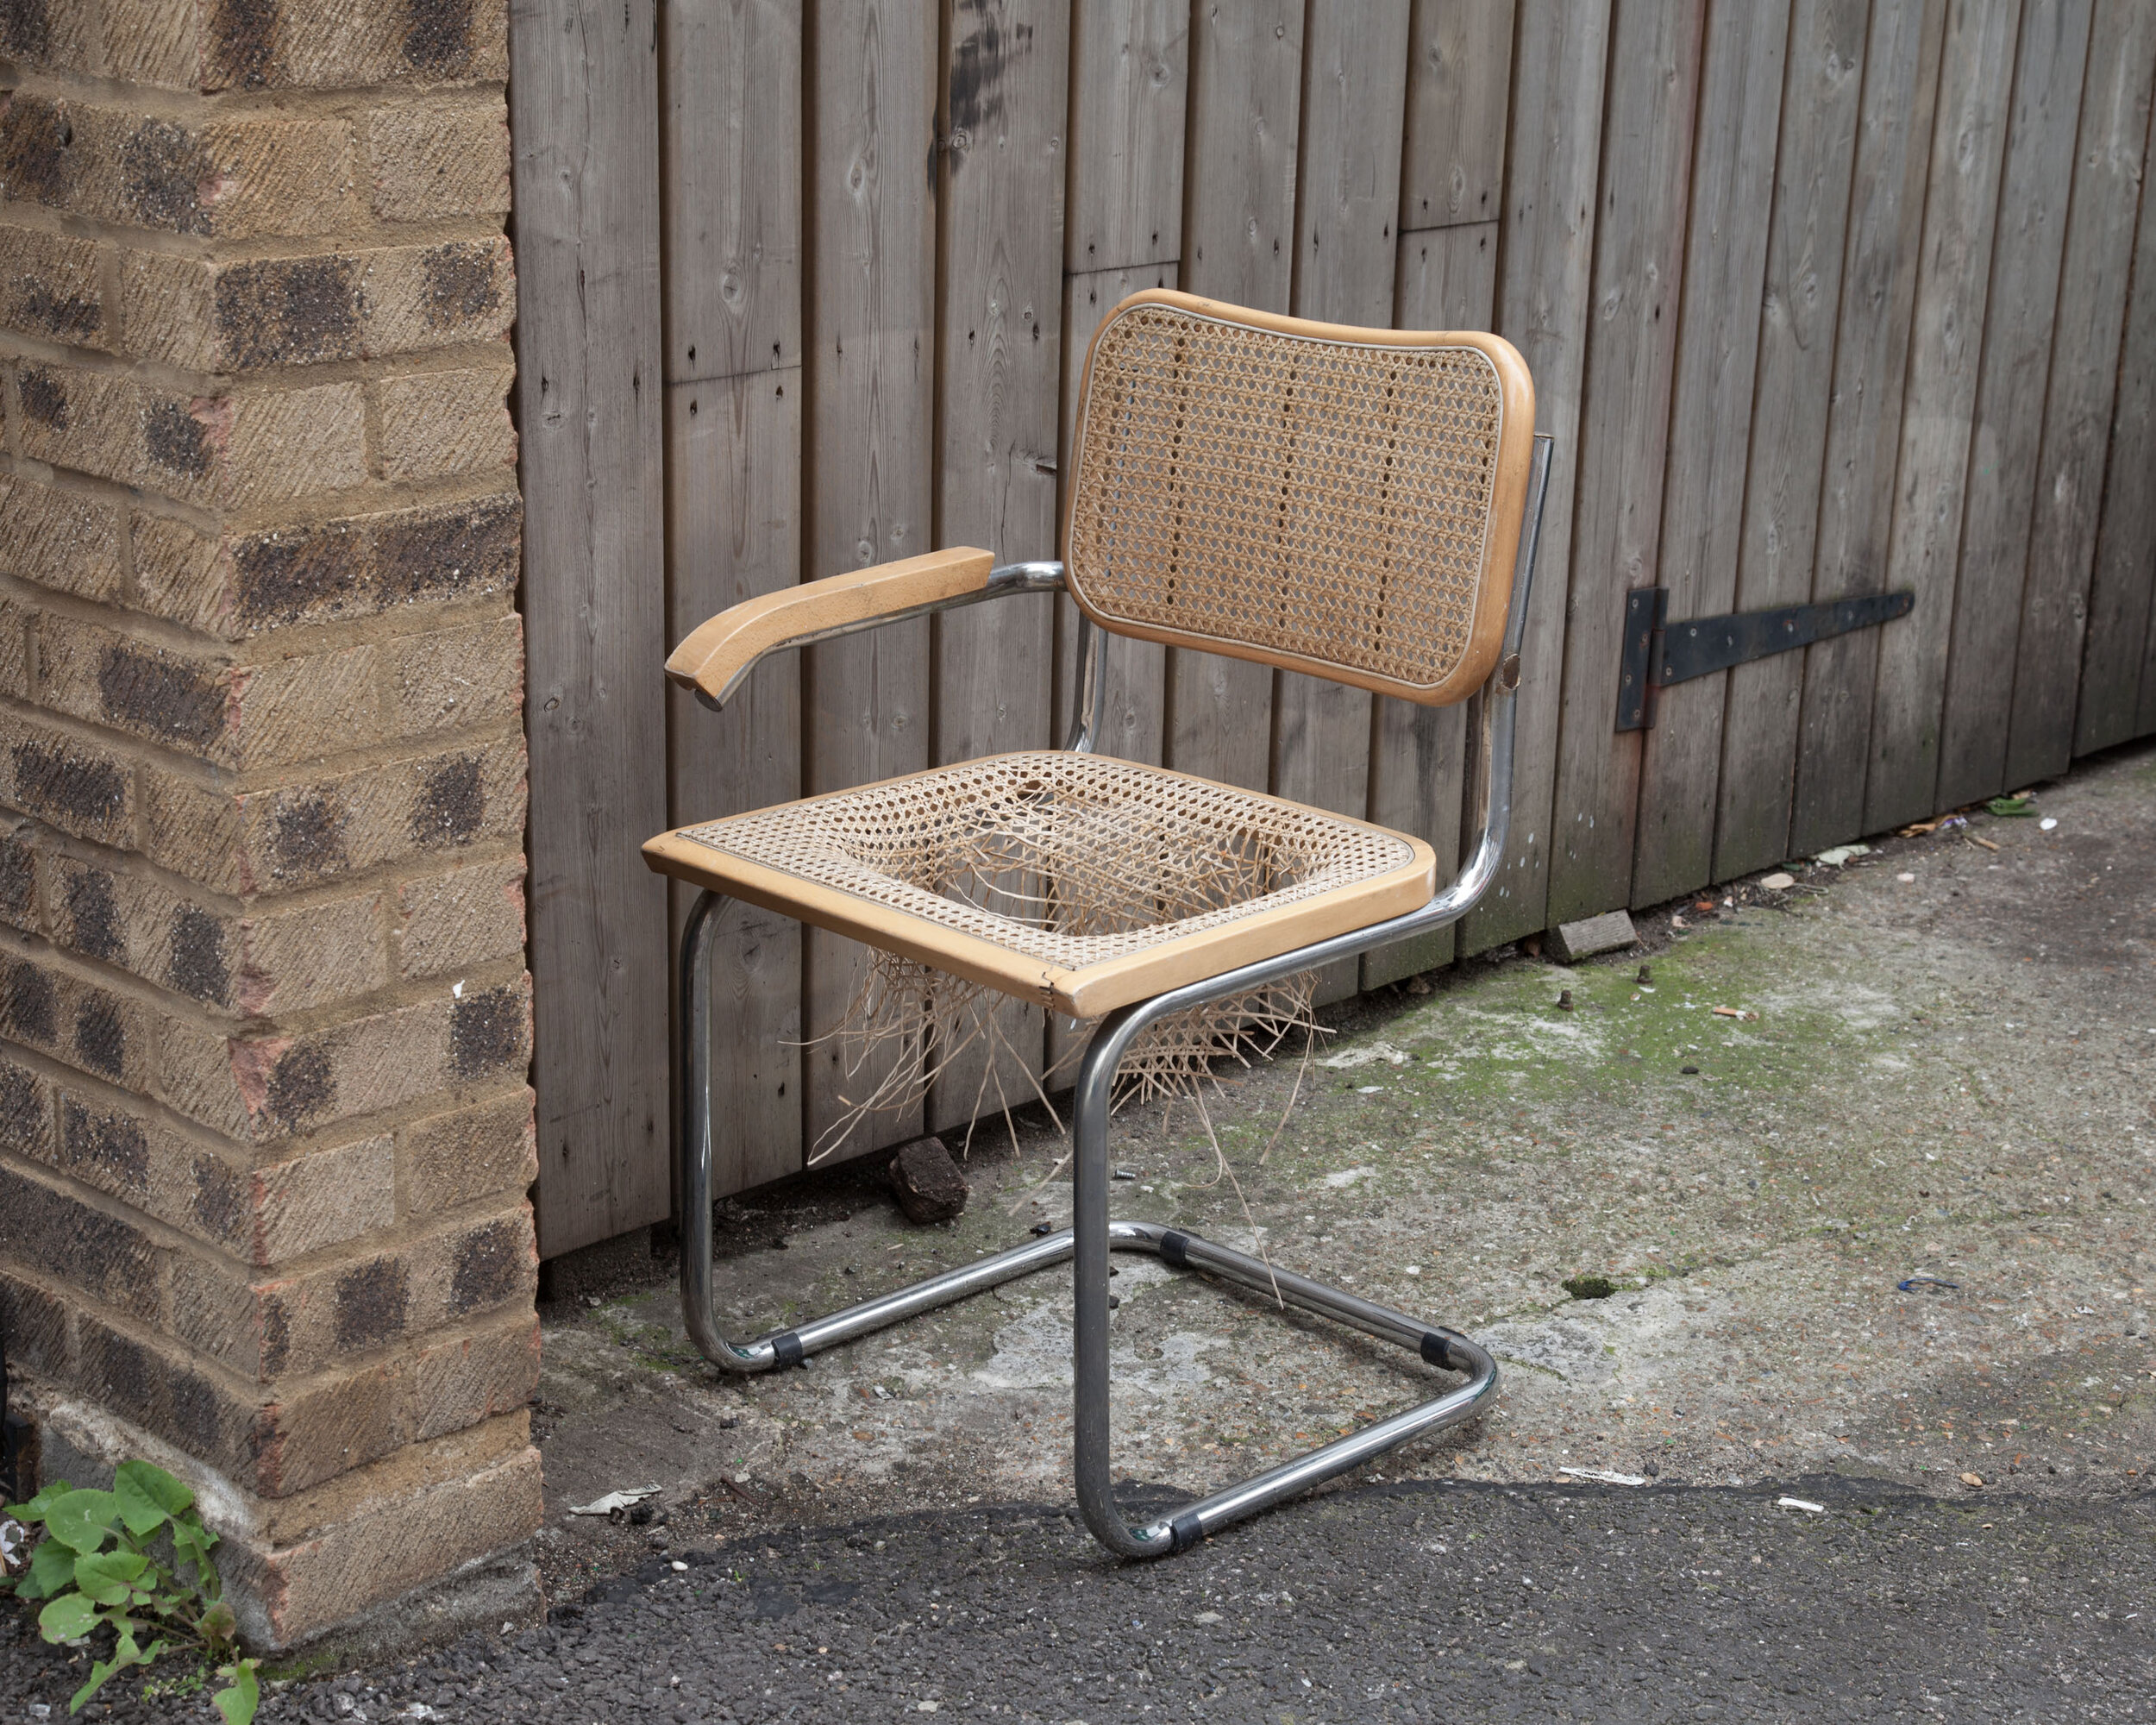  London Chair No. 7 